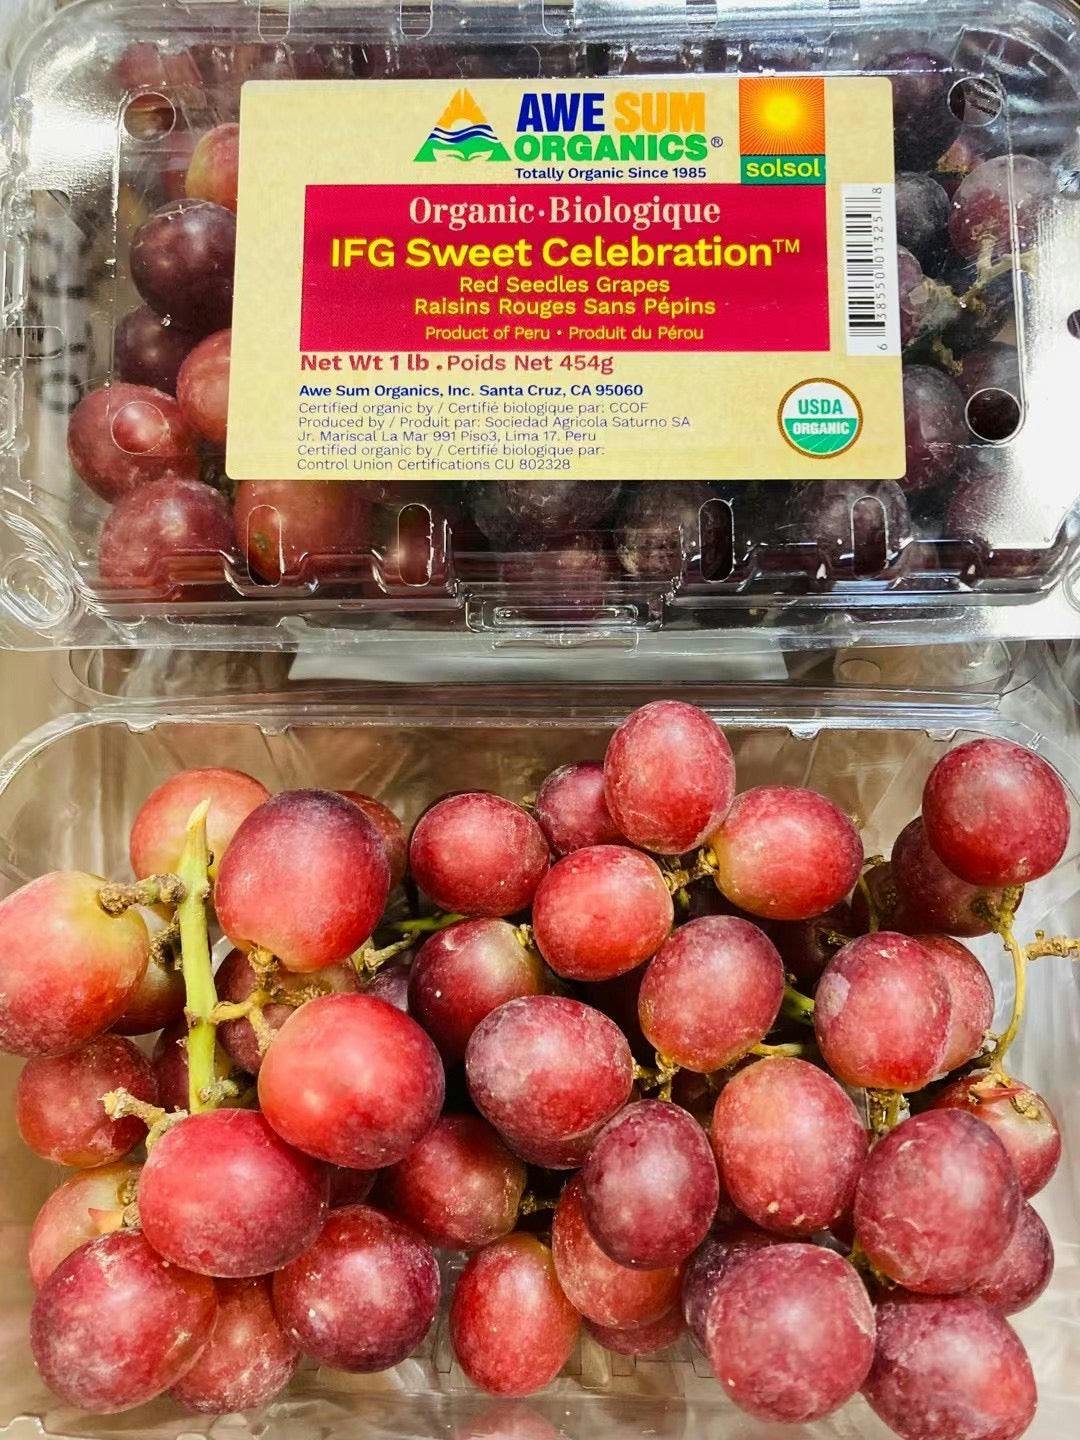 周三到店 有机无籽红提 organic biologique red seedless grapes